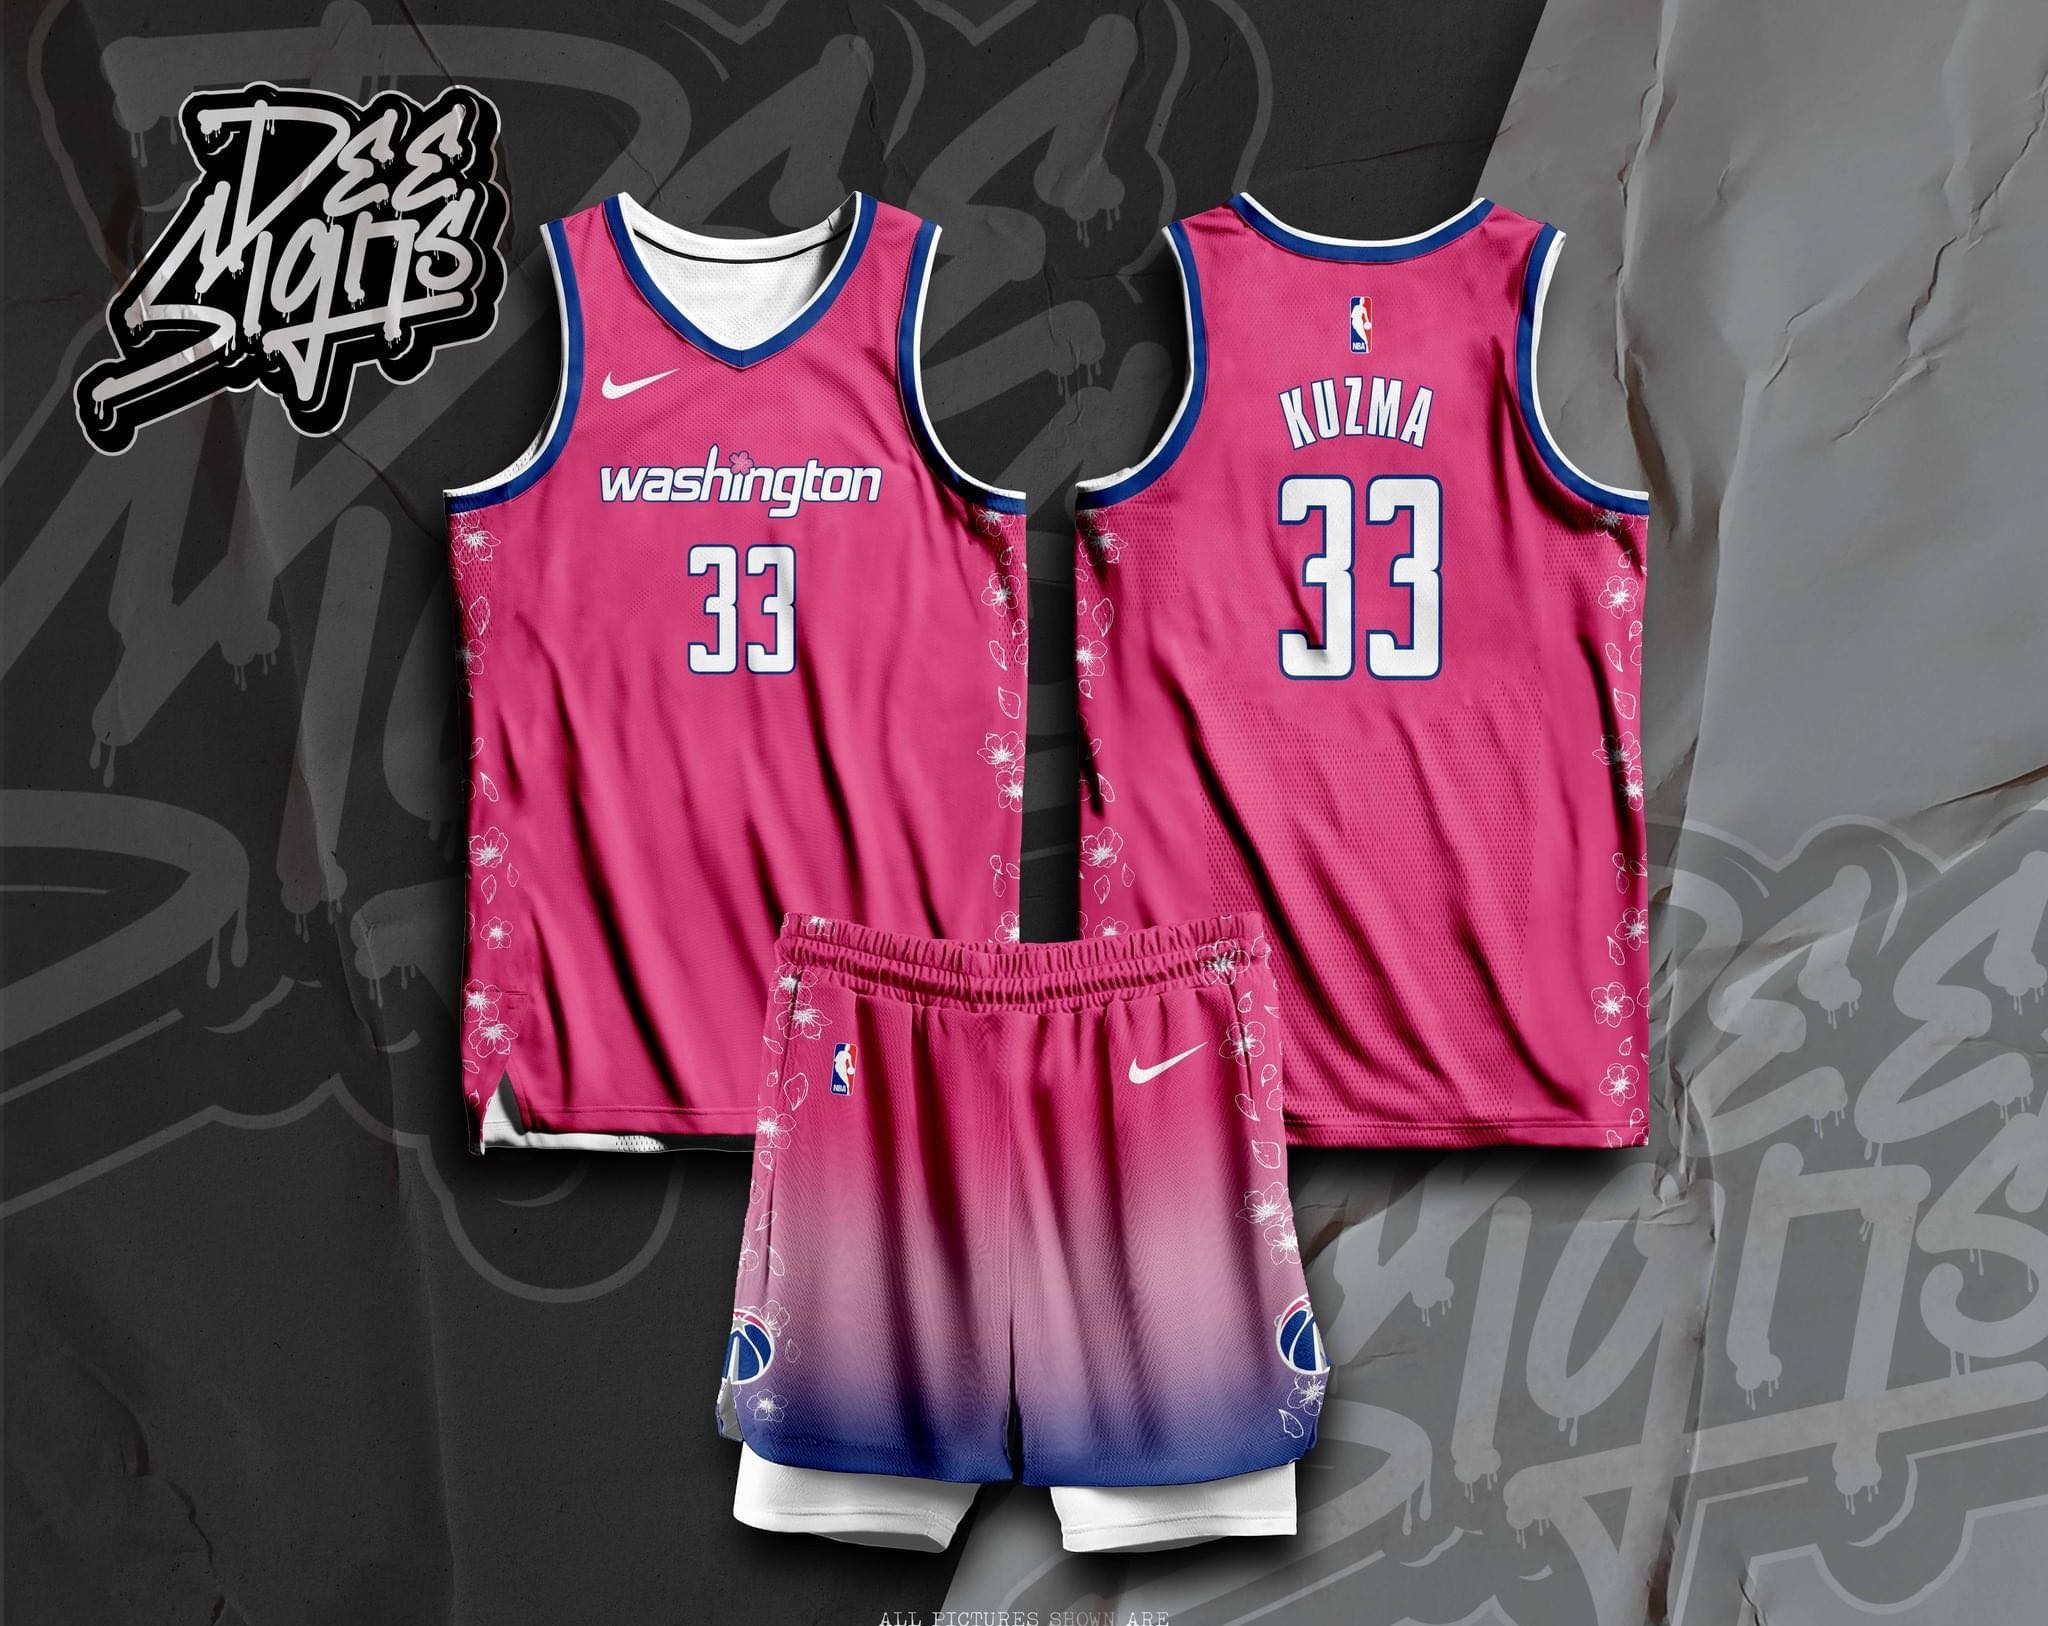 wizards pink jersey design